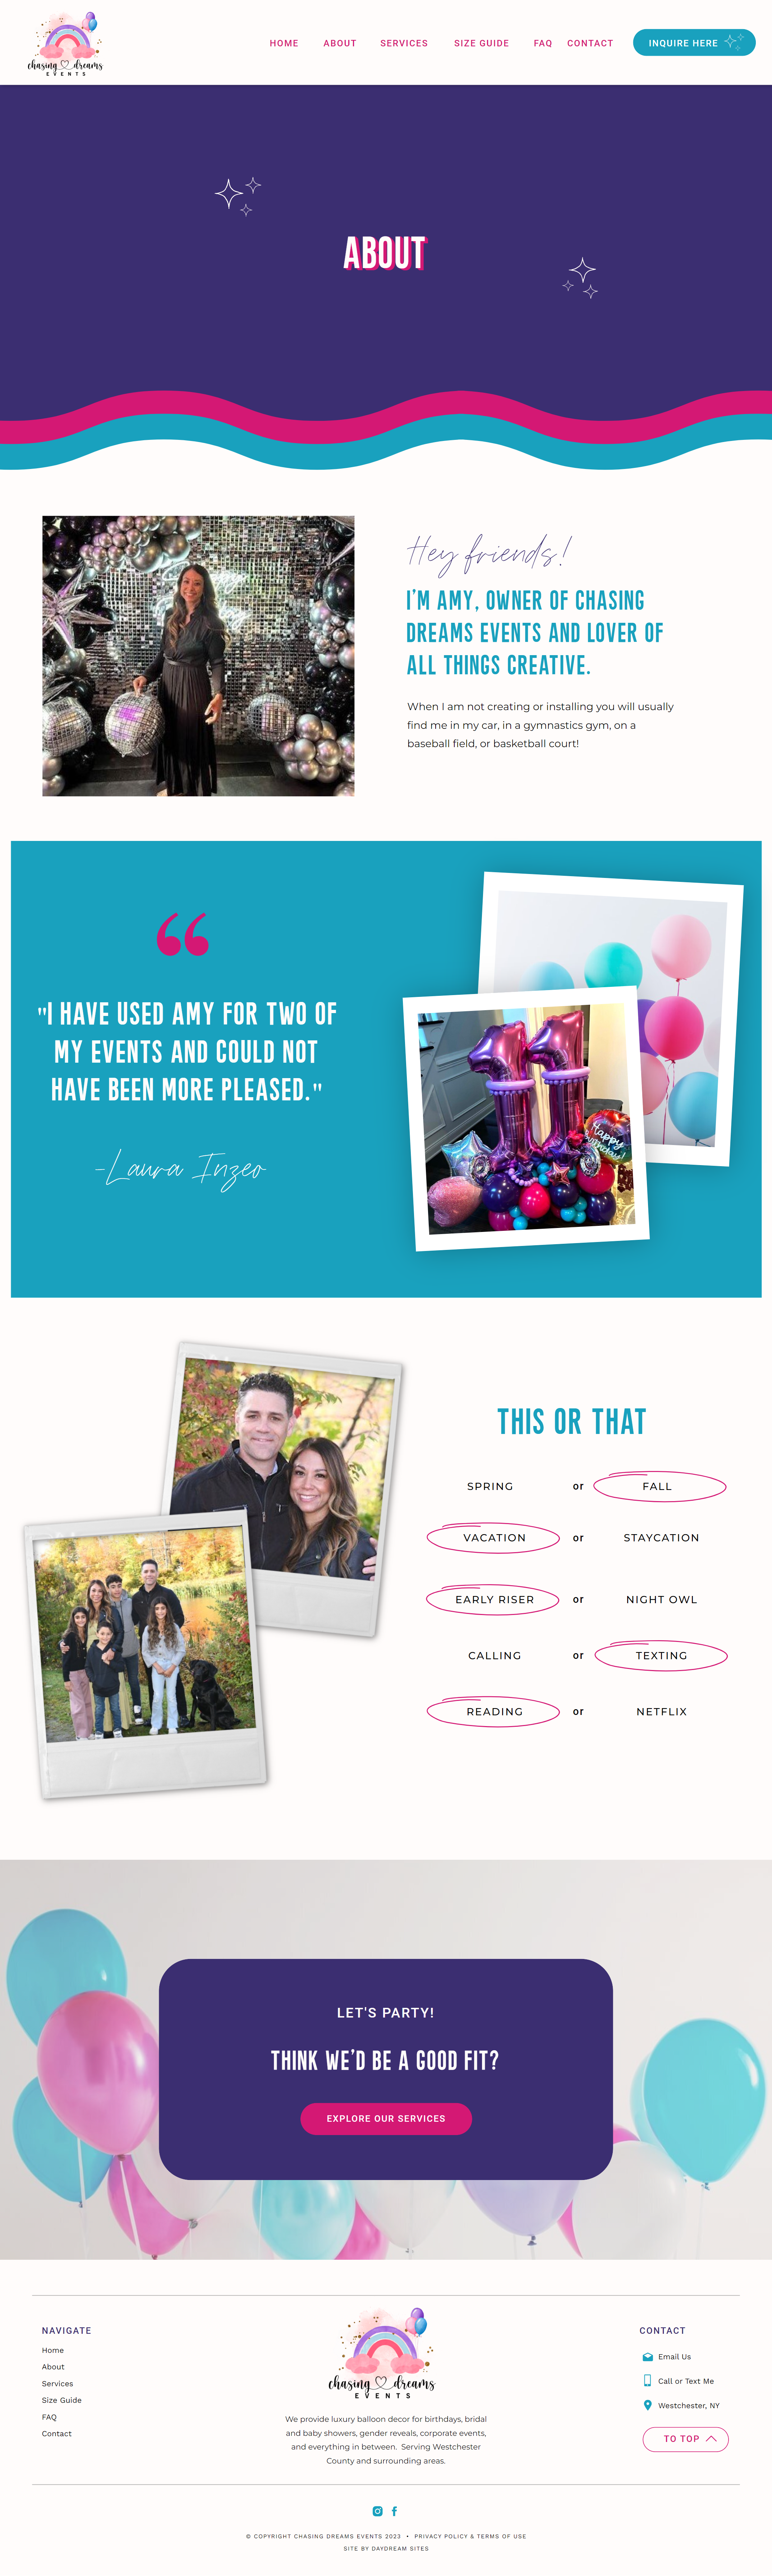 Fun, creative balloon artist or event planner website